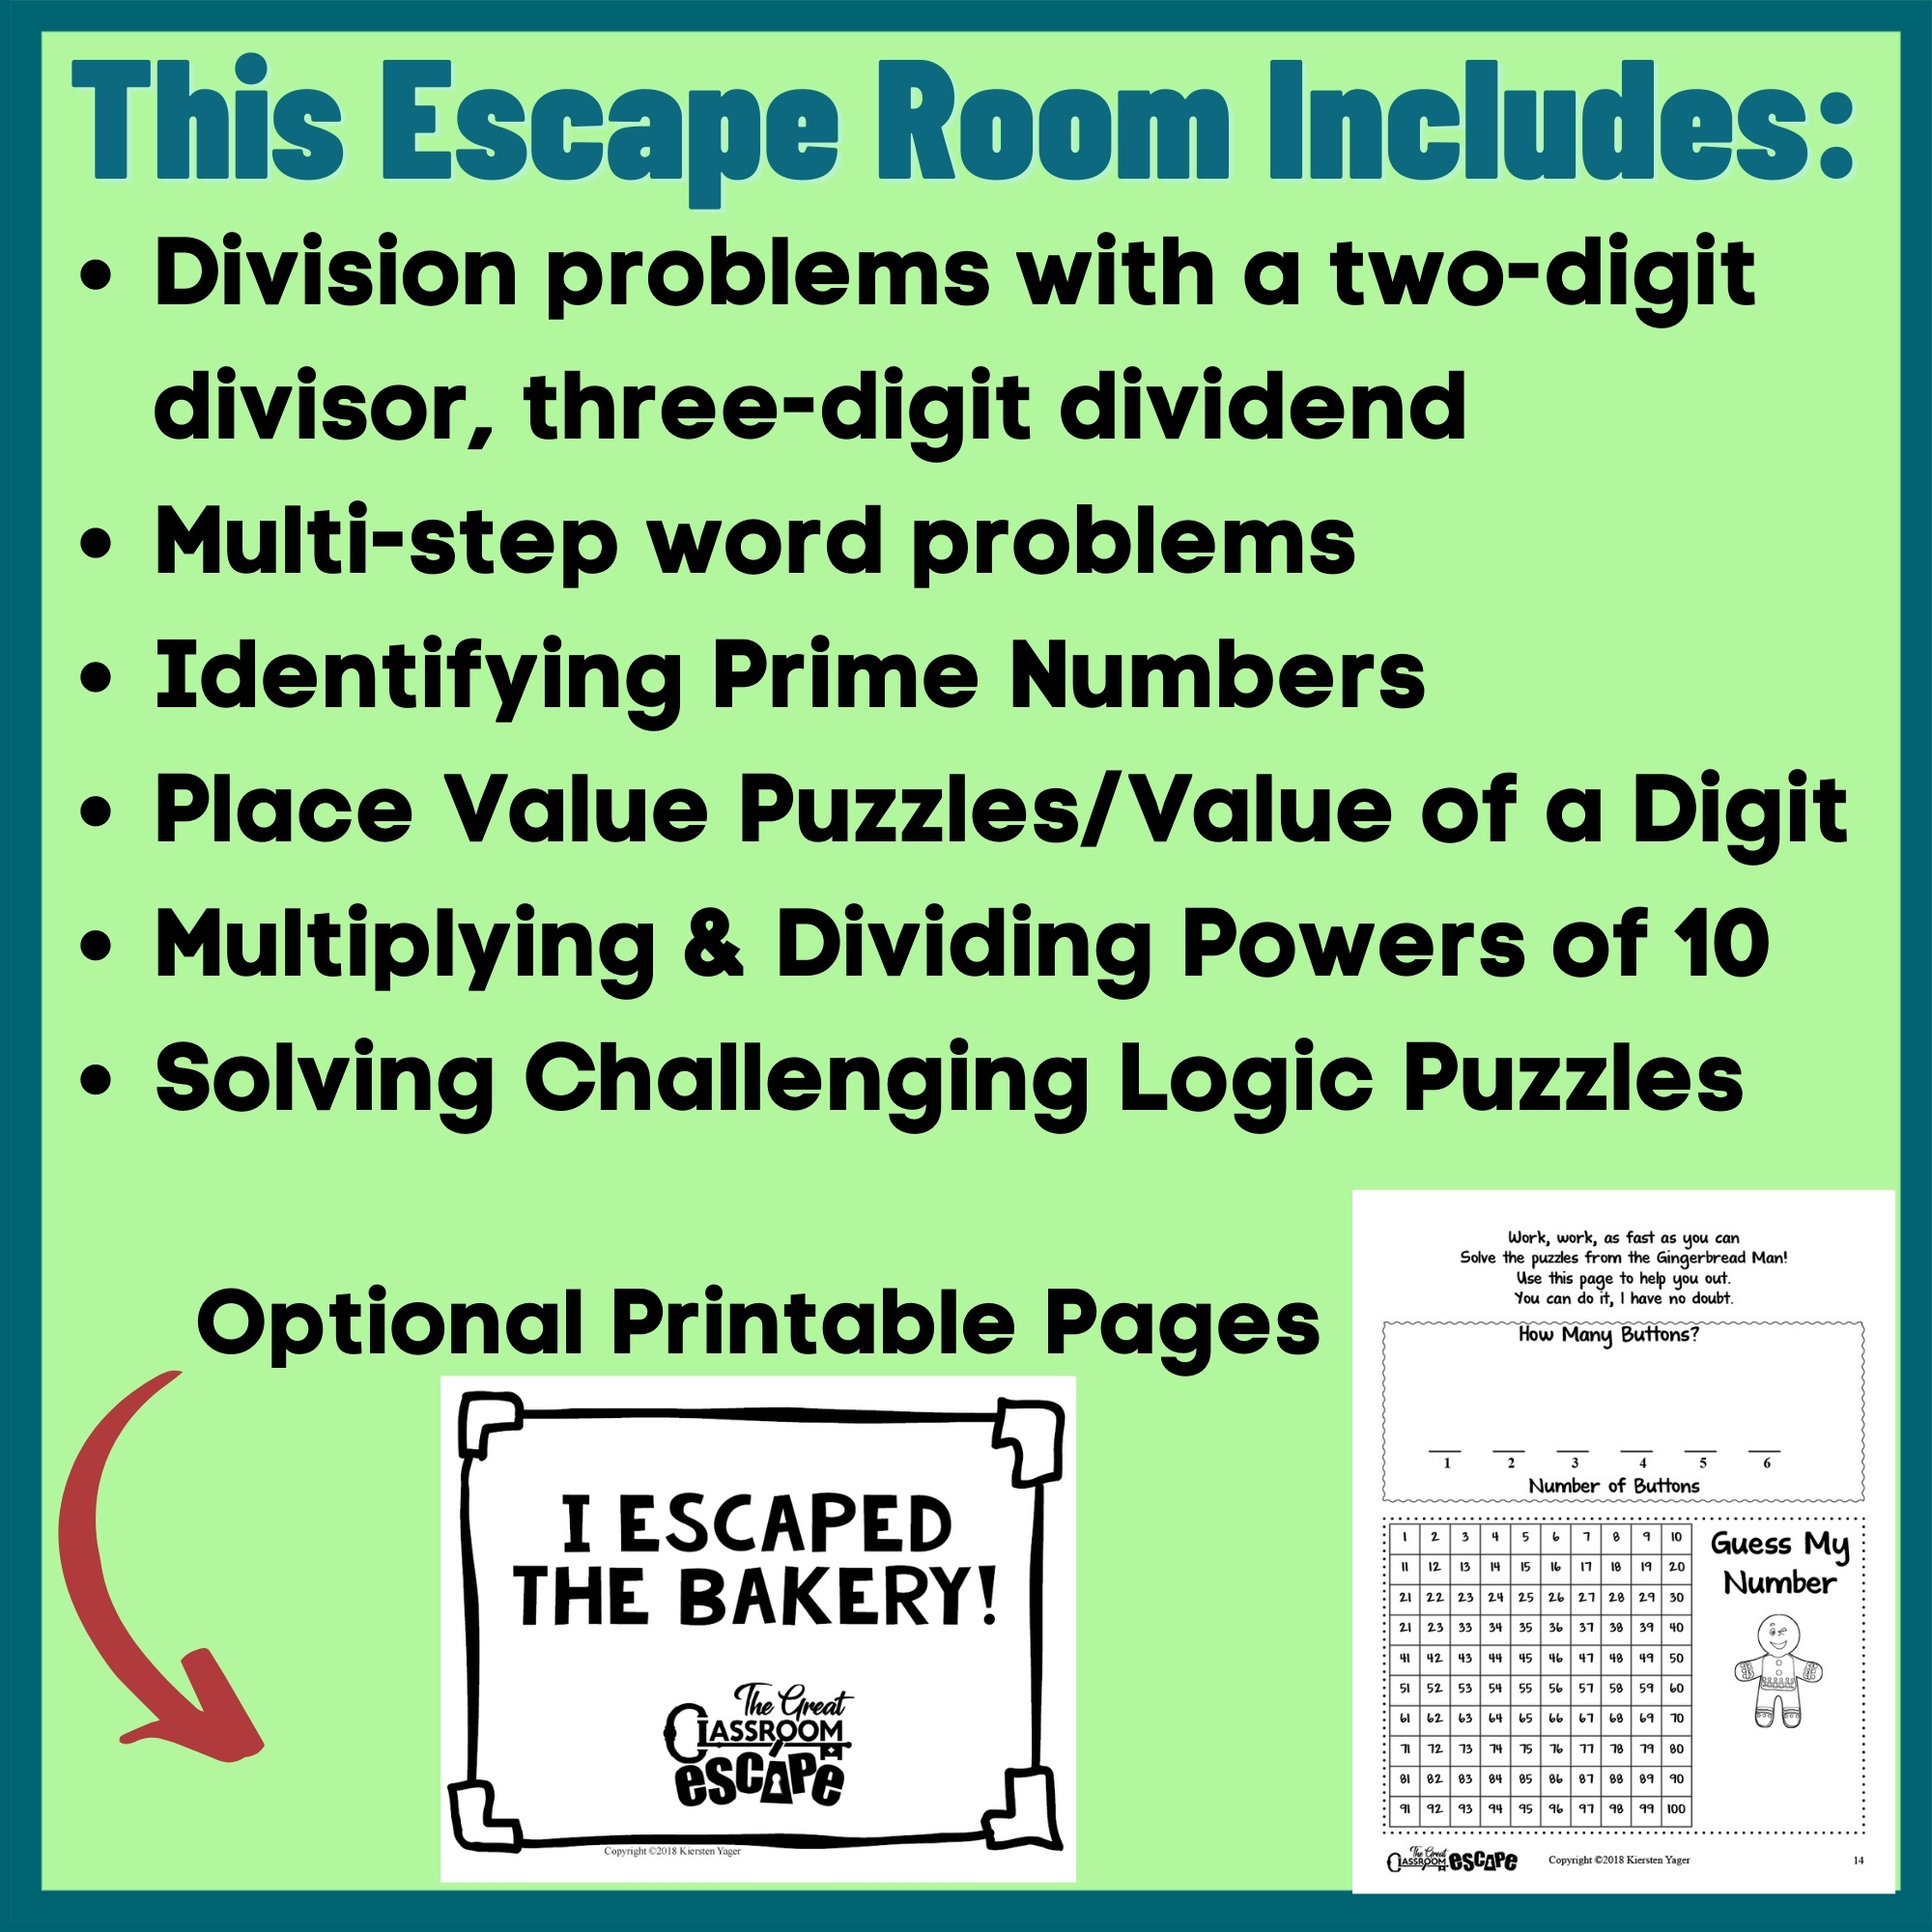 5th-grade-math-escape-room-activity-revenge-of-the-gingerbread-man-the-great-classroom-escape